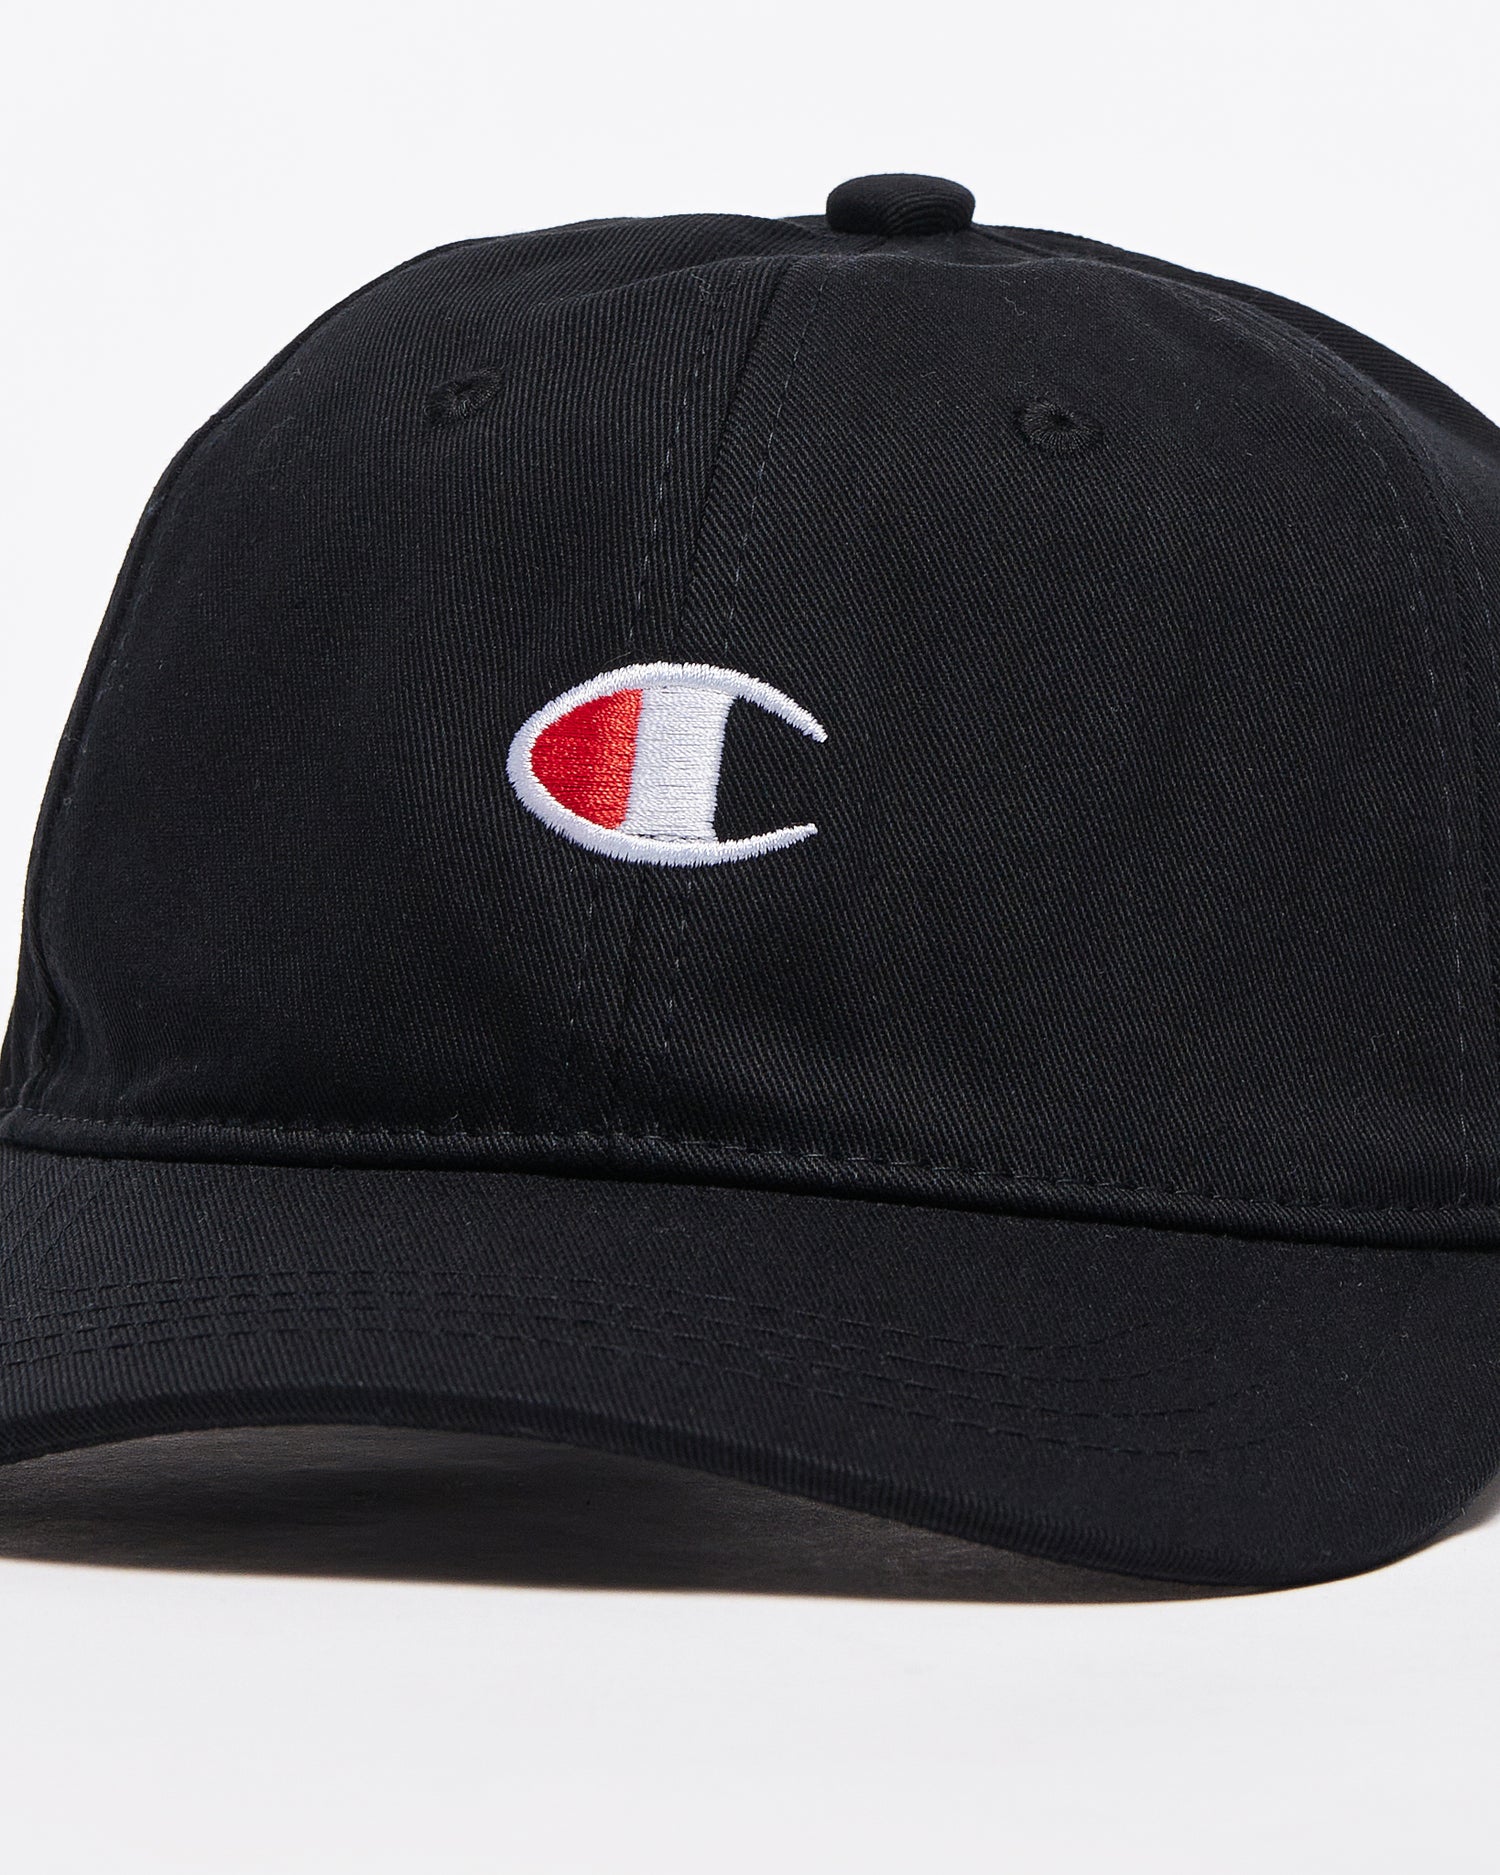 CHP Logo Embroidered Black Cap 11.90